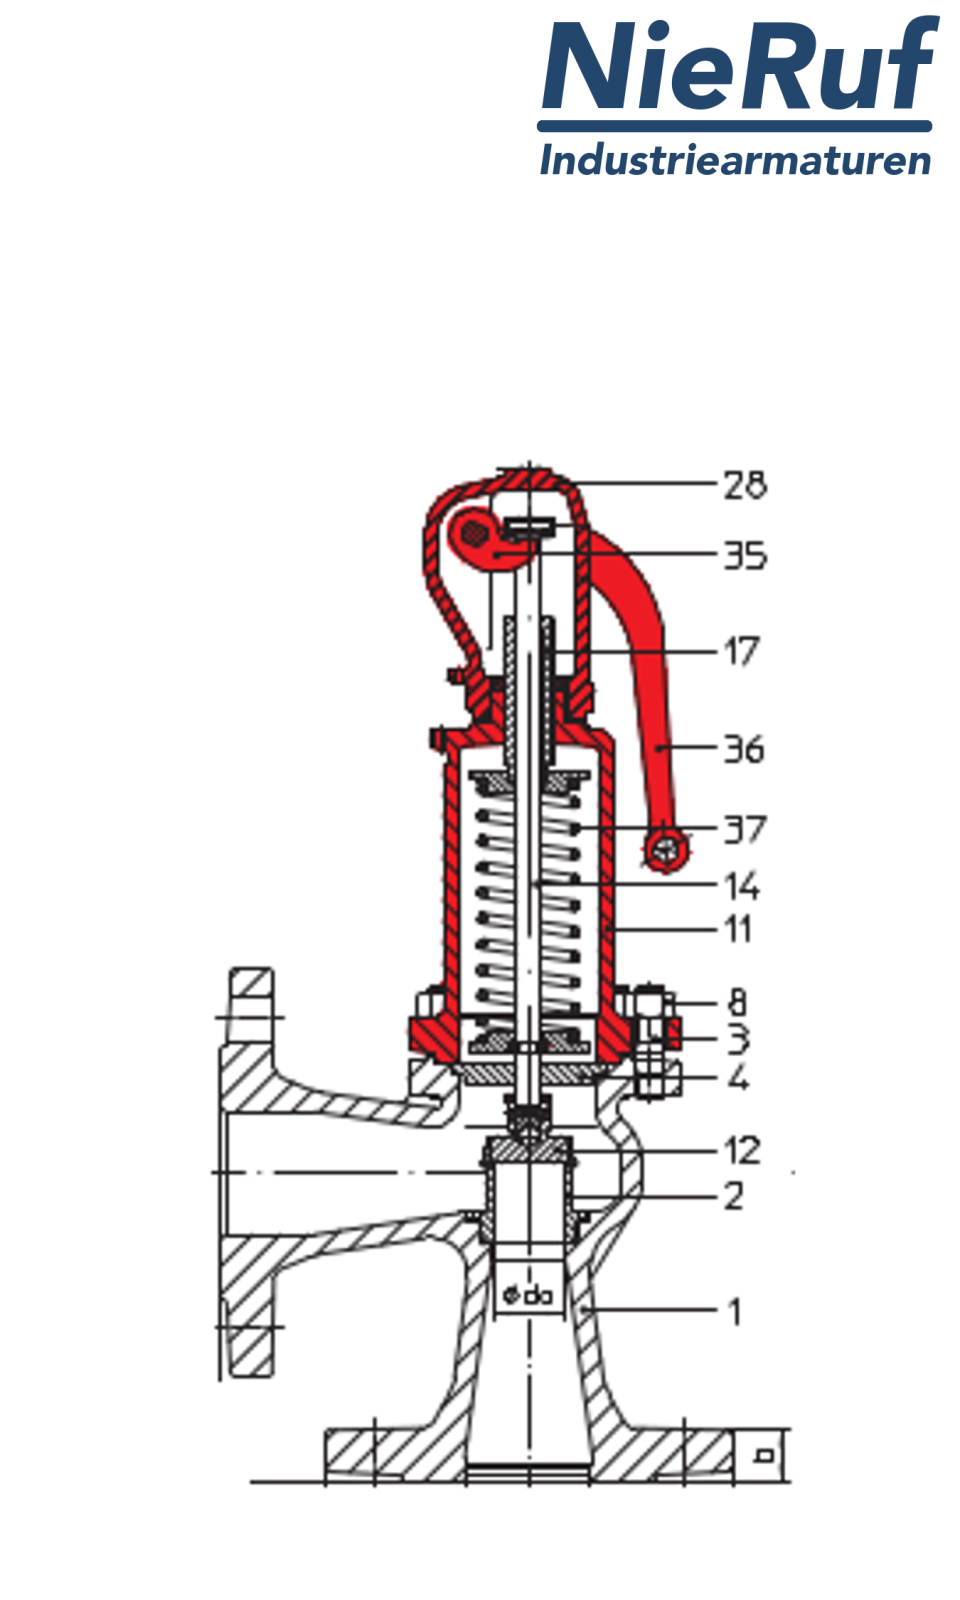 flange-safety valve DN40/DN40 SF01, cast iron EN-JL1040 FPM, with lever